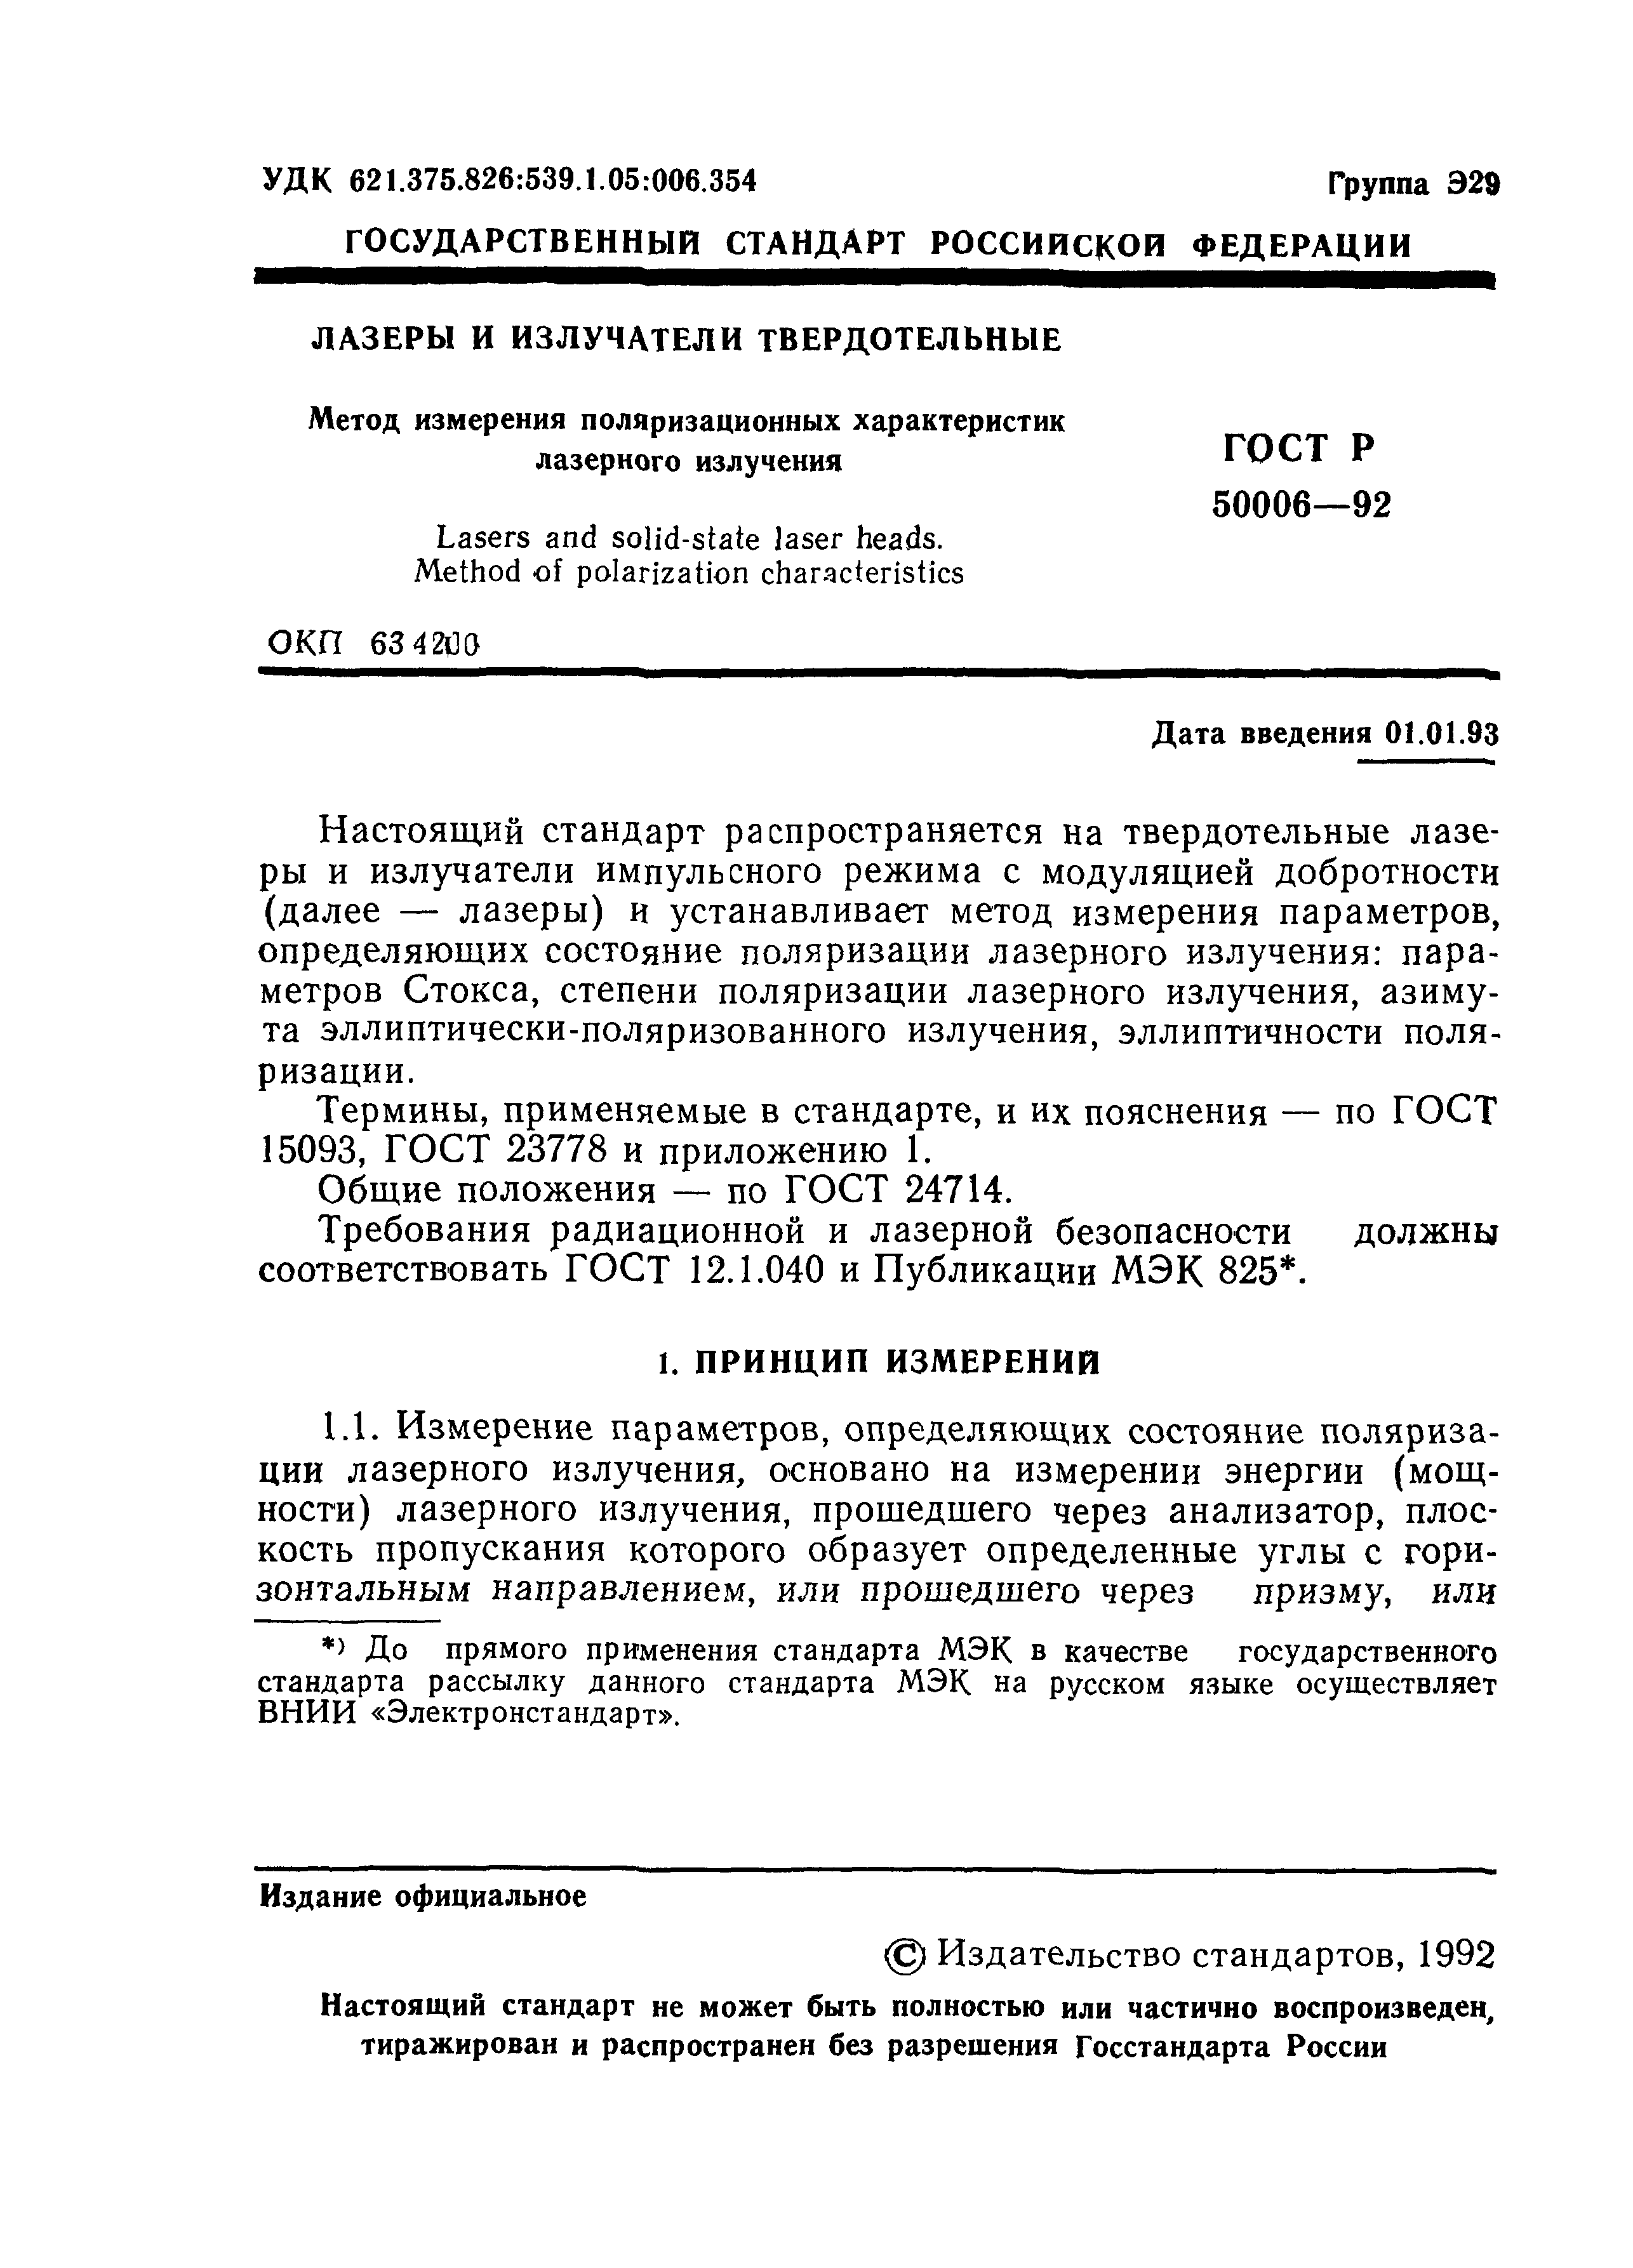 ГОСТ Р 50006-92